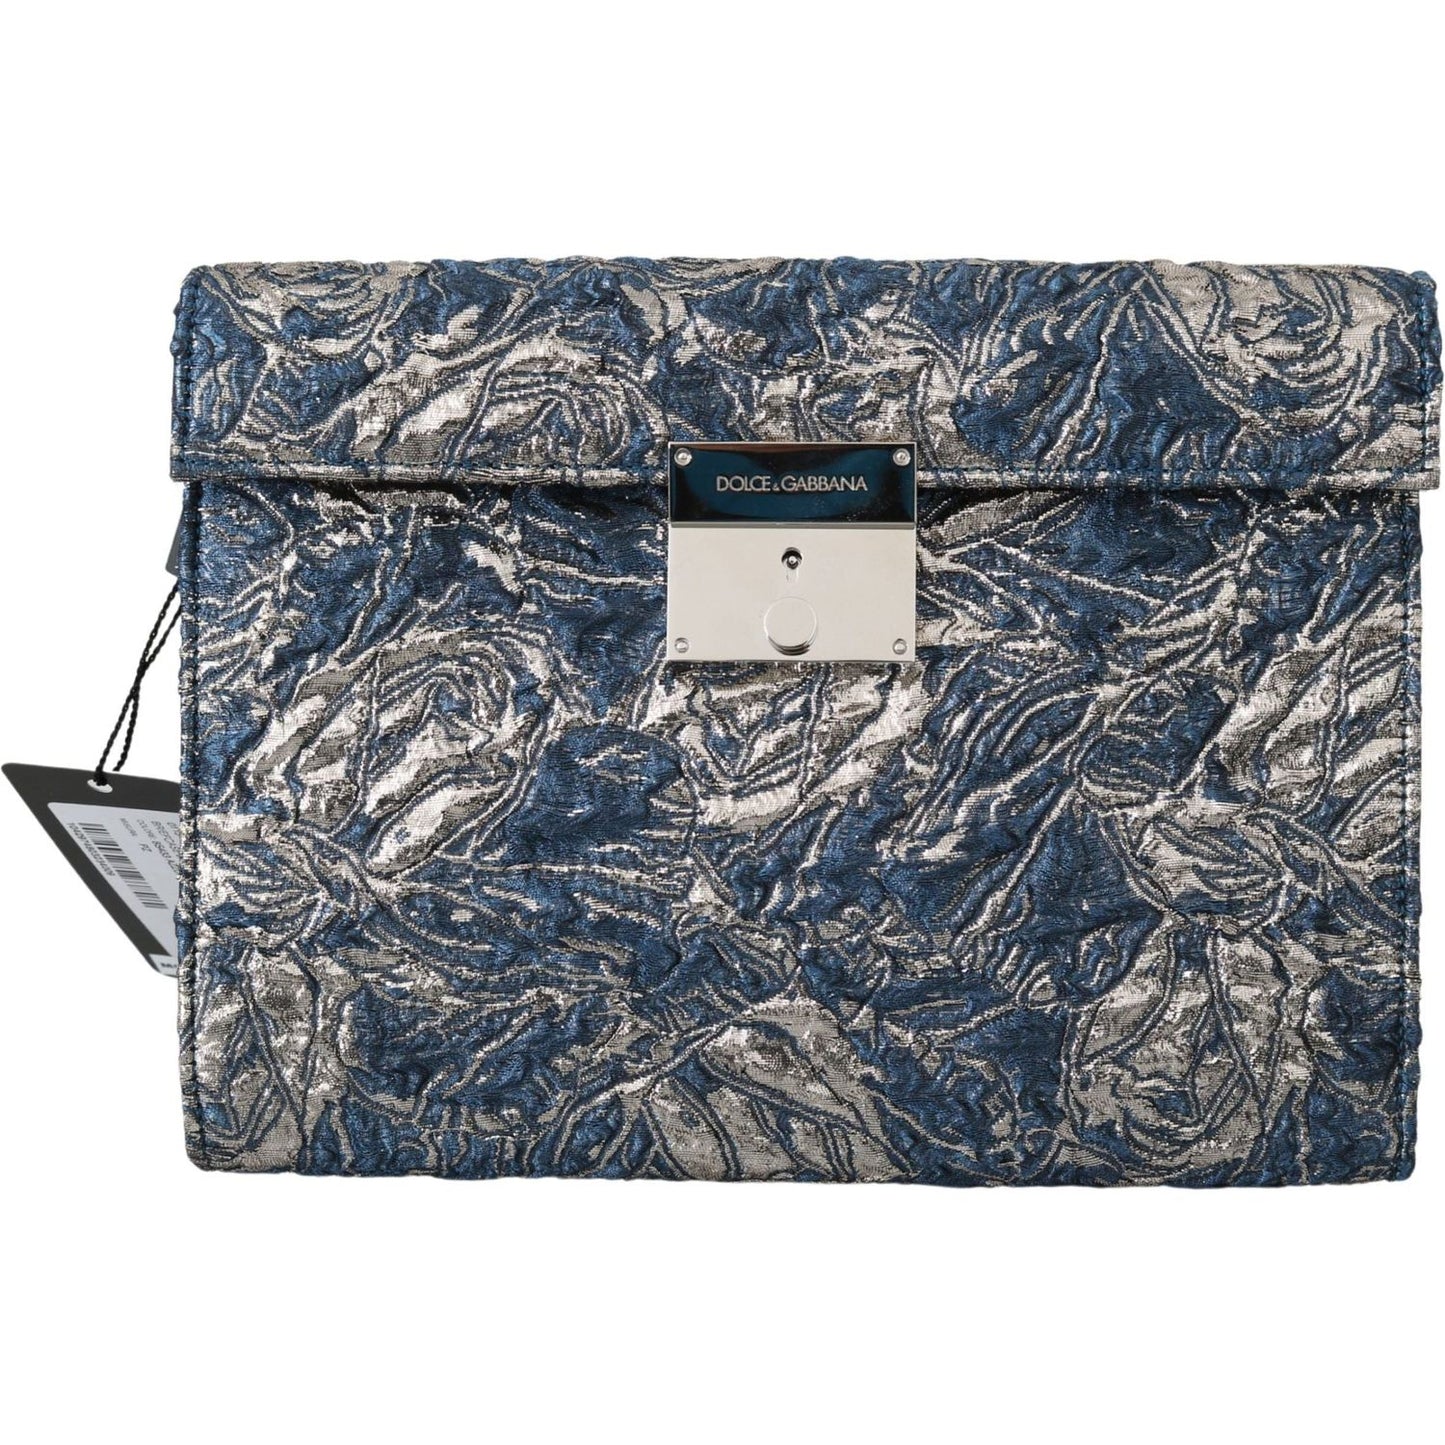 Dolce & Gabbana Elegant Blue Croc-Print Briefcase Clutch blue-silver-jacquard-leather-document-briefcase-bag Briefcase IMG_0198-1-scaled-40a2ce10-1bf.jpg